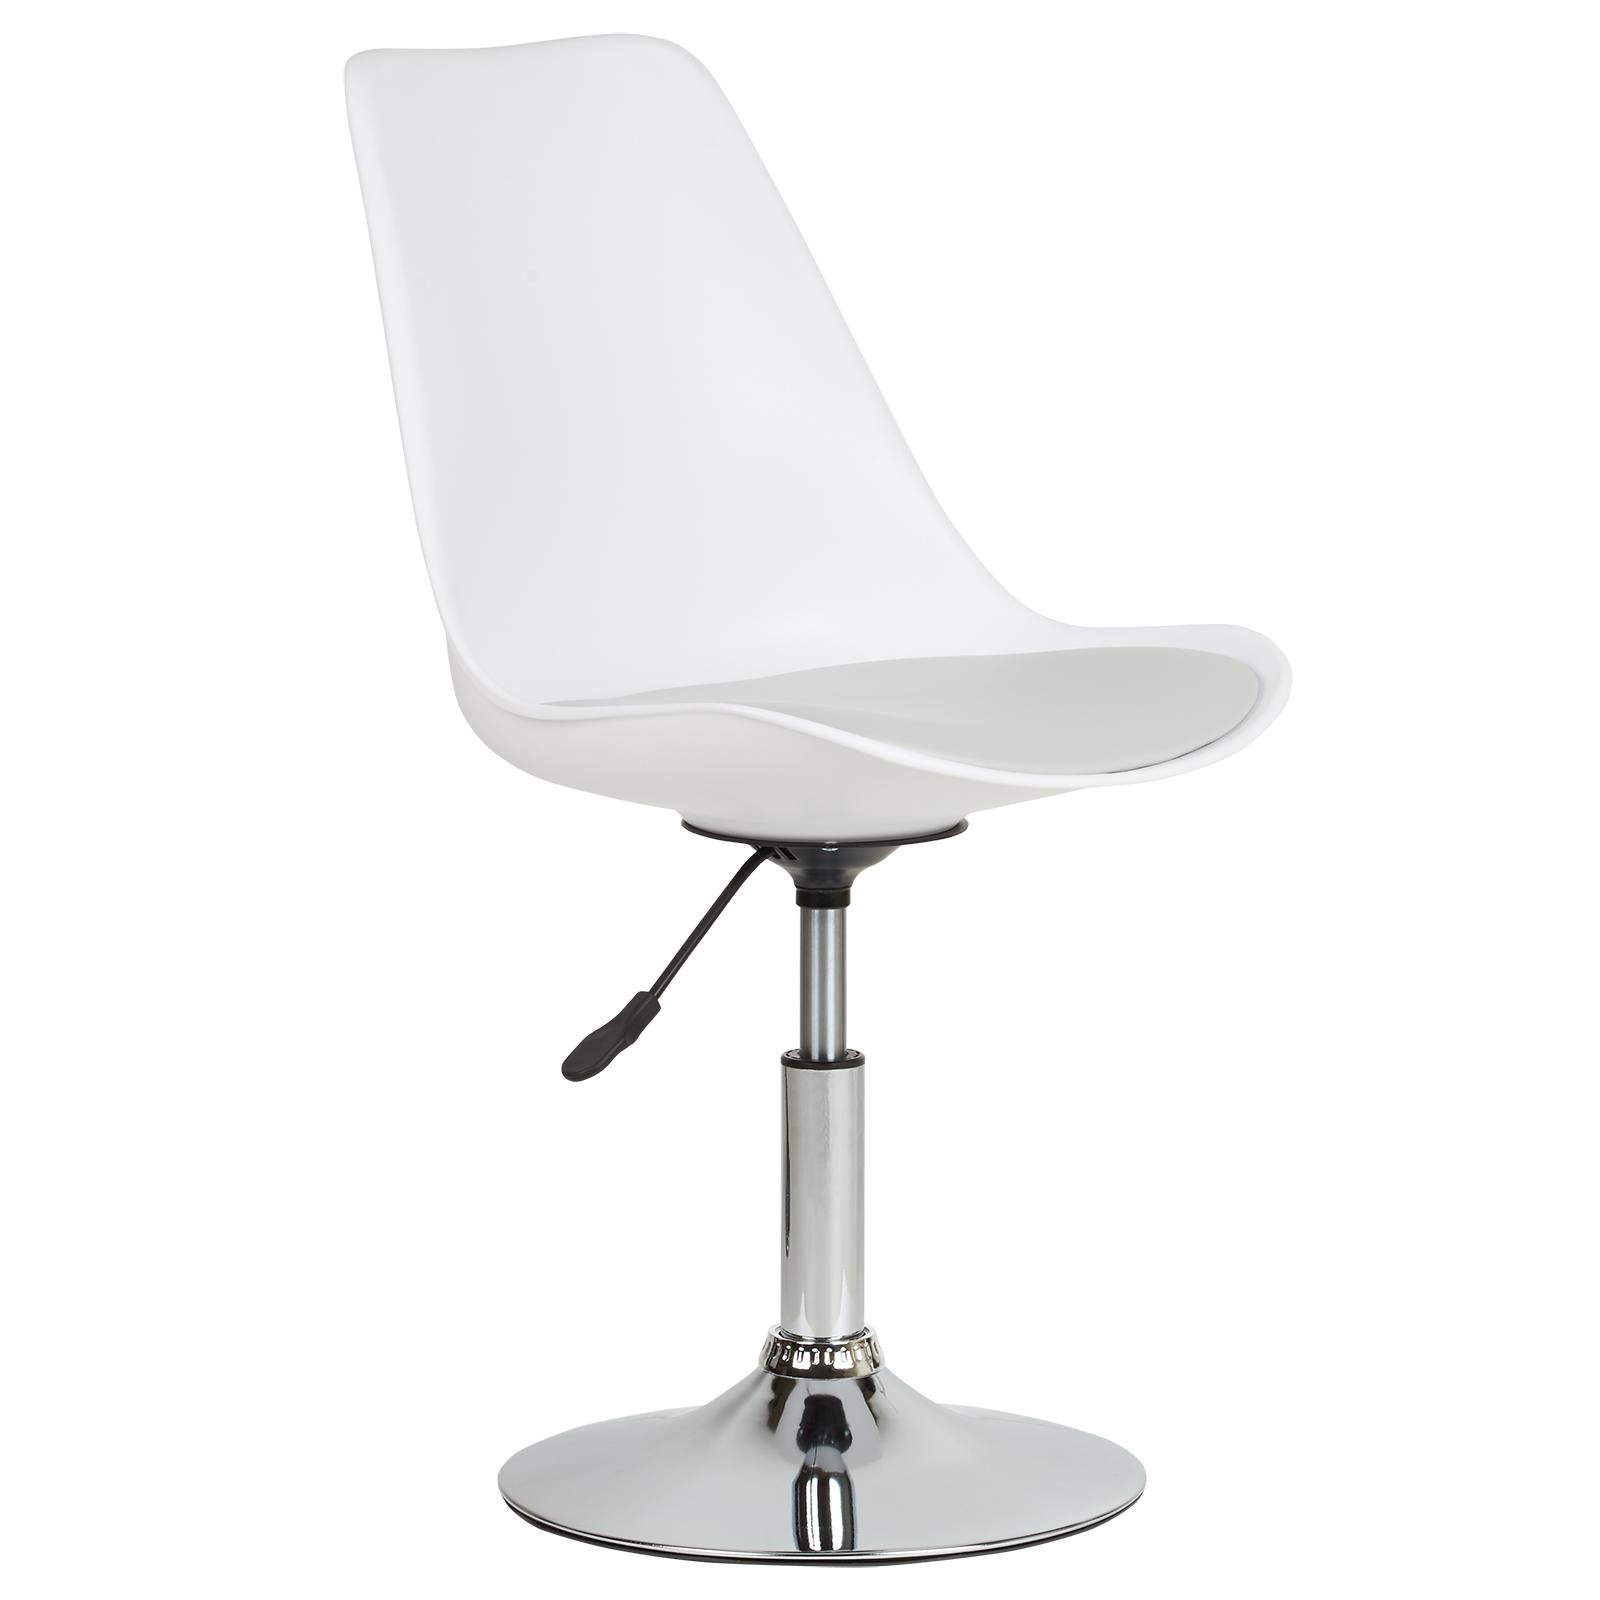 Hartleys White Swivel Desk Chair - Chrome Base with Grey Cushion